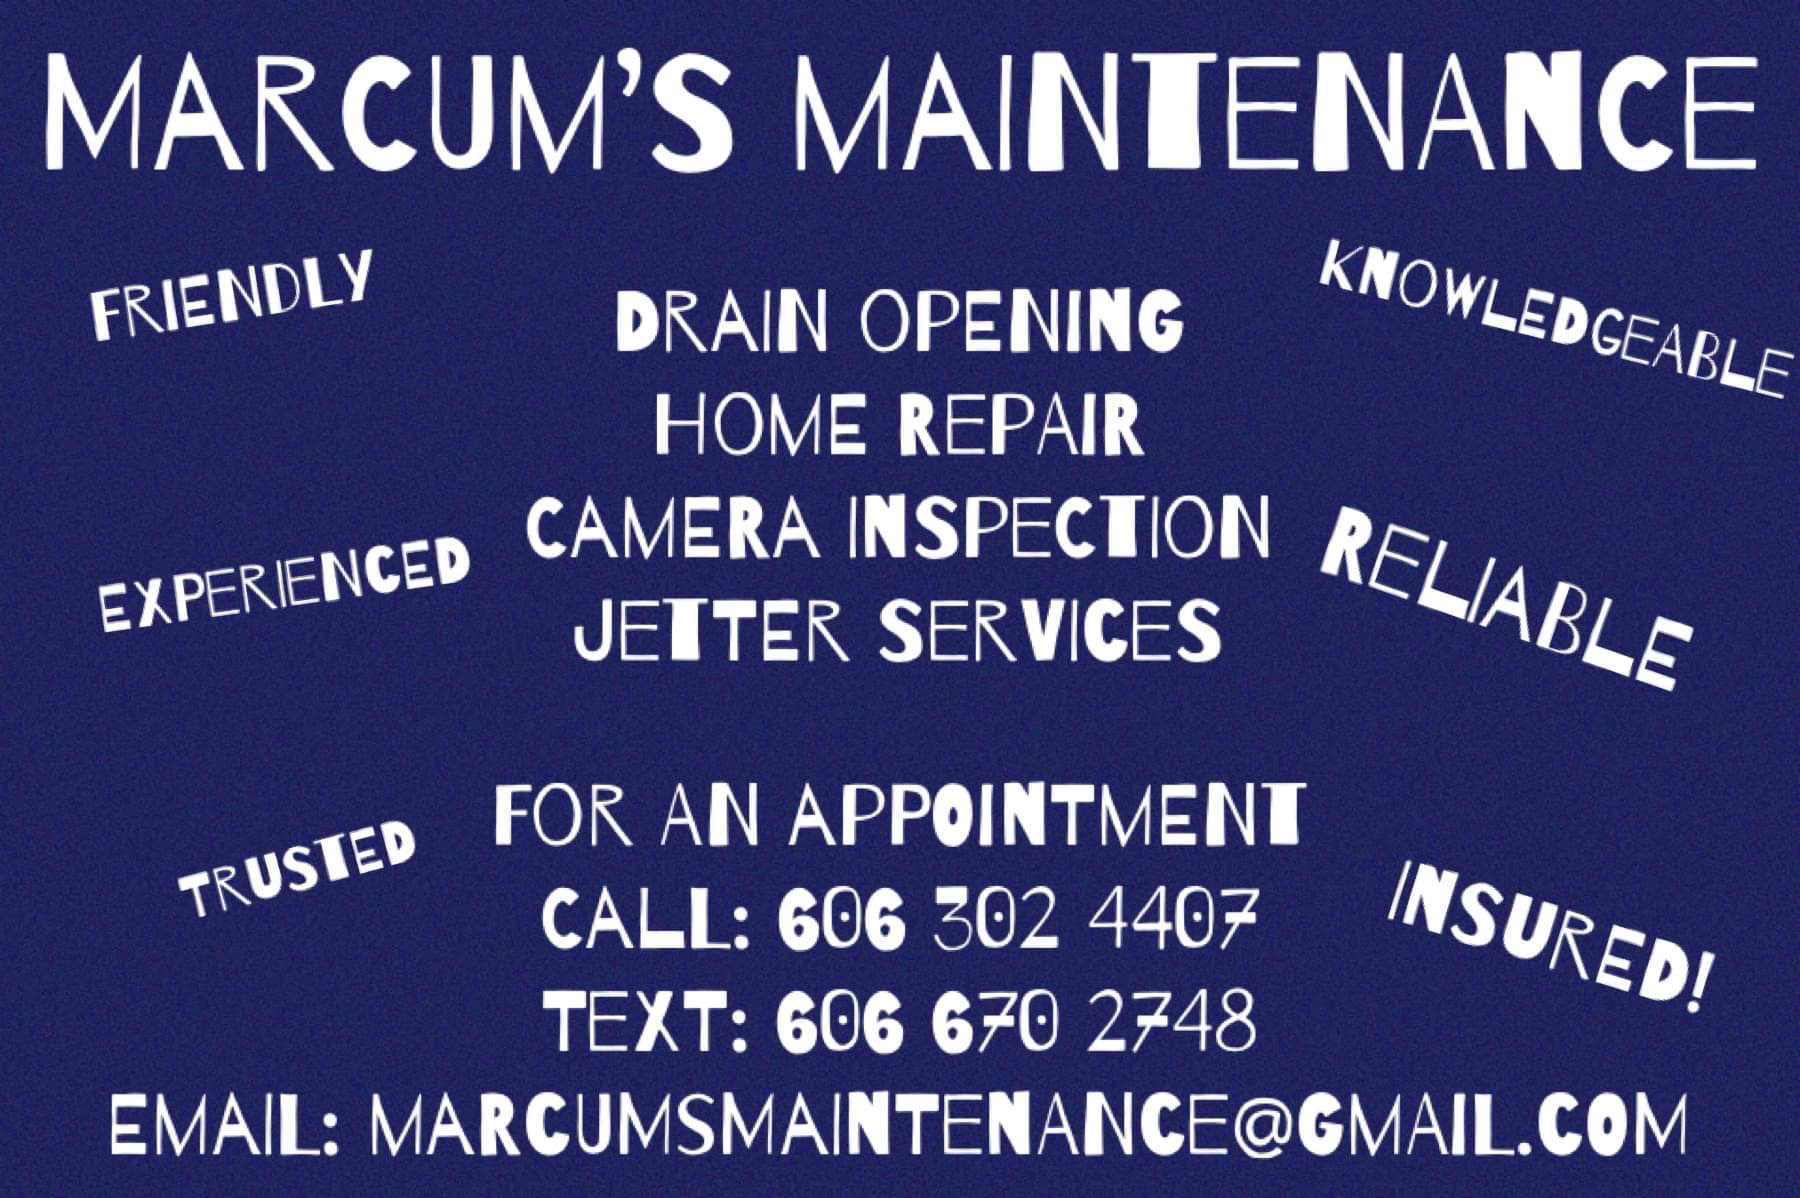 Marcums Maintenance ——— plumbing drain specialist 126 17th St, Middlesboro Kentucky 40965